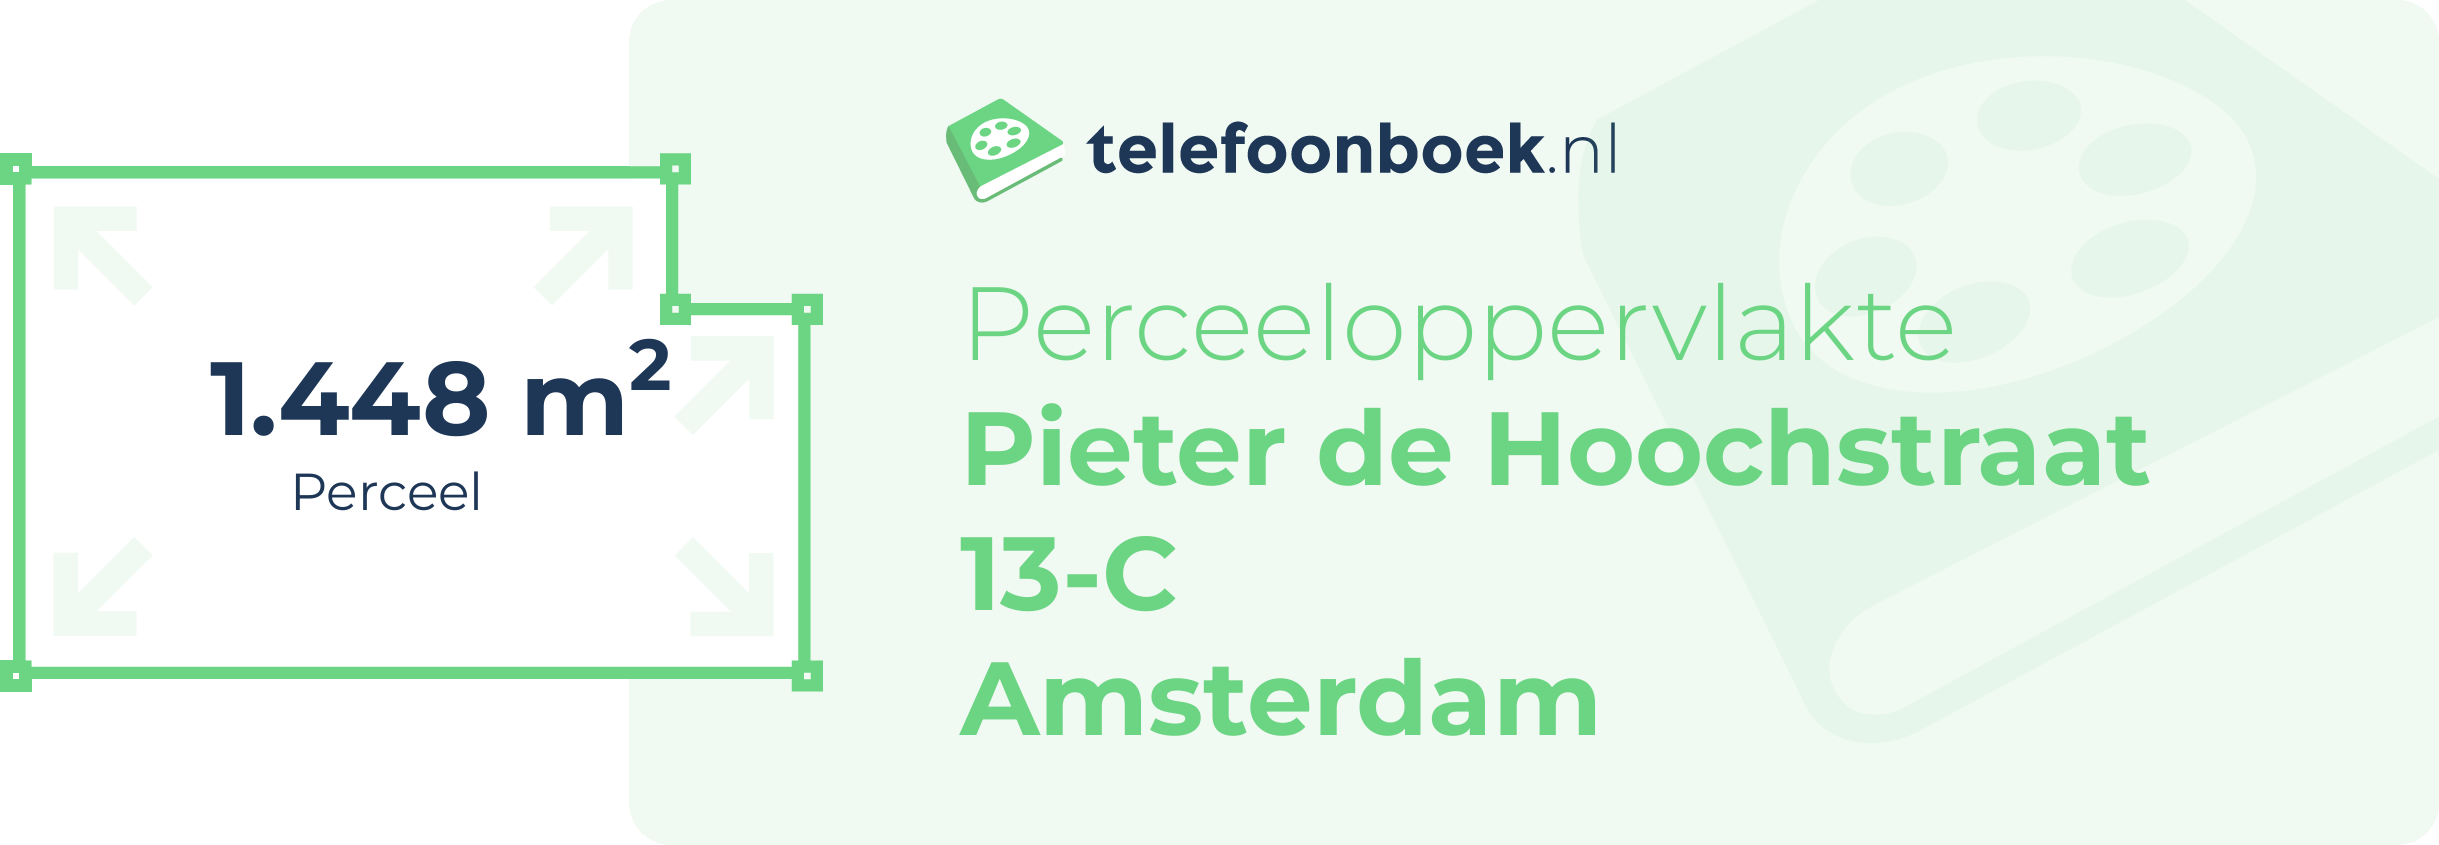 Perceeloppervlakte Pieter De Hoochstraat 13-C Amsterdam